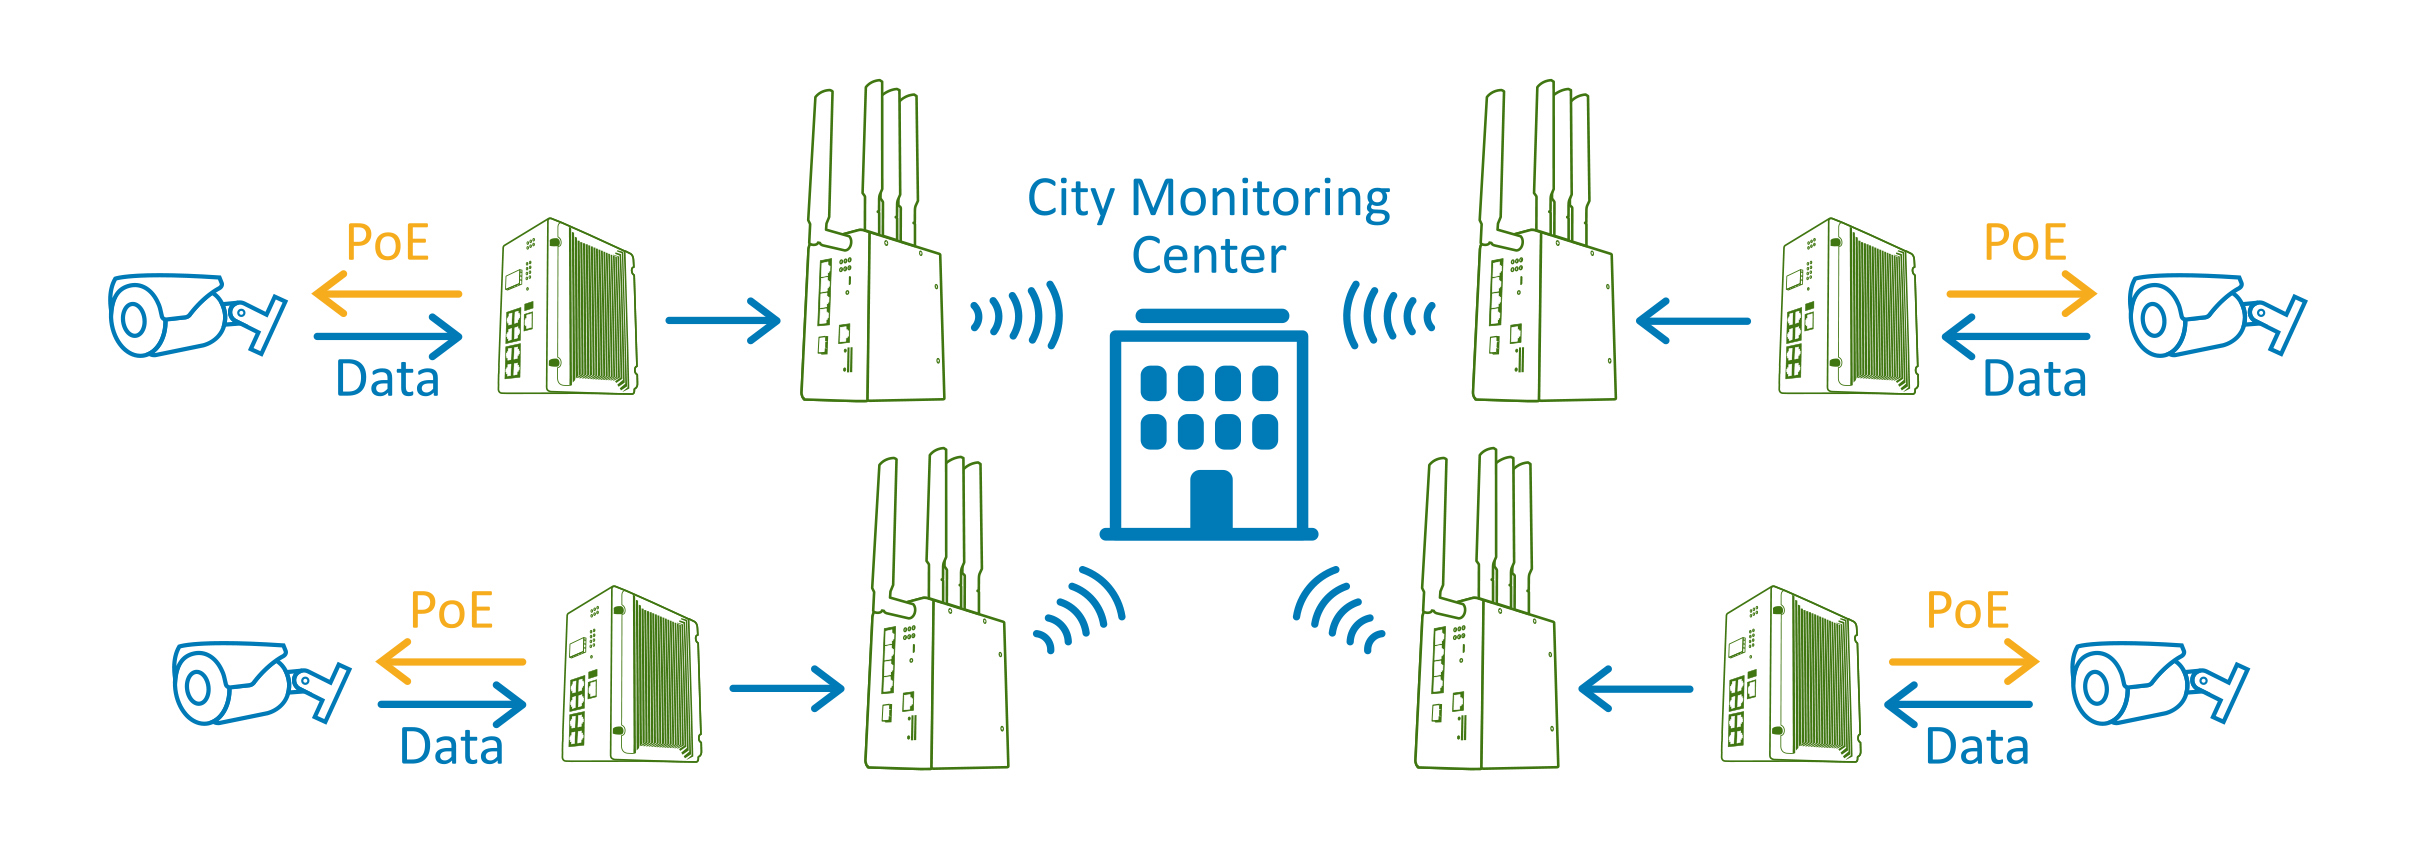 City surveillance network